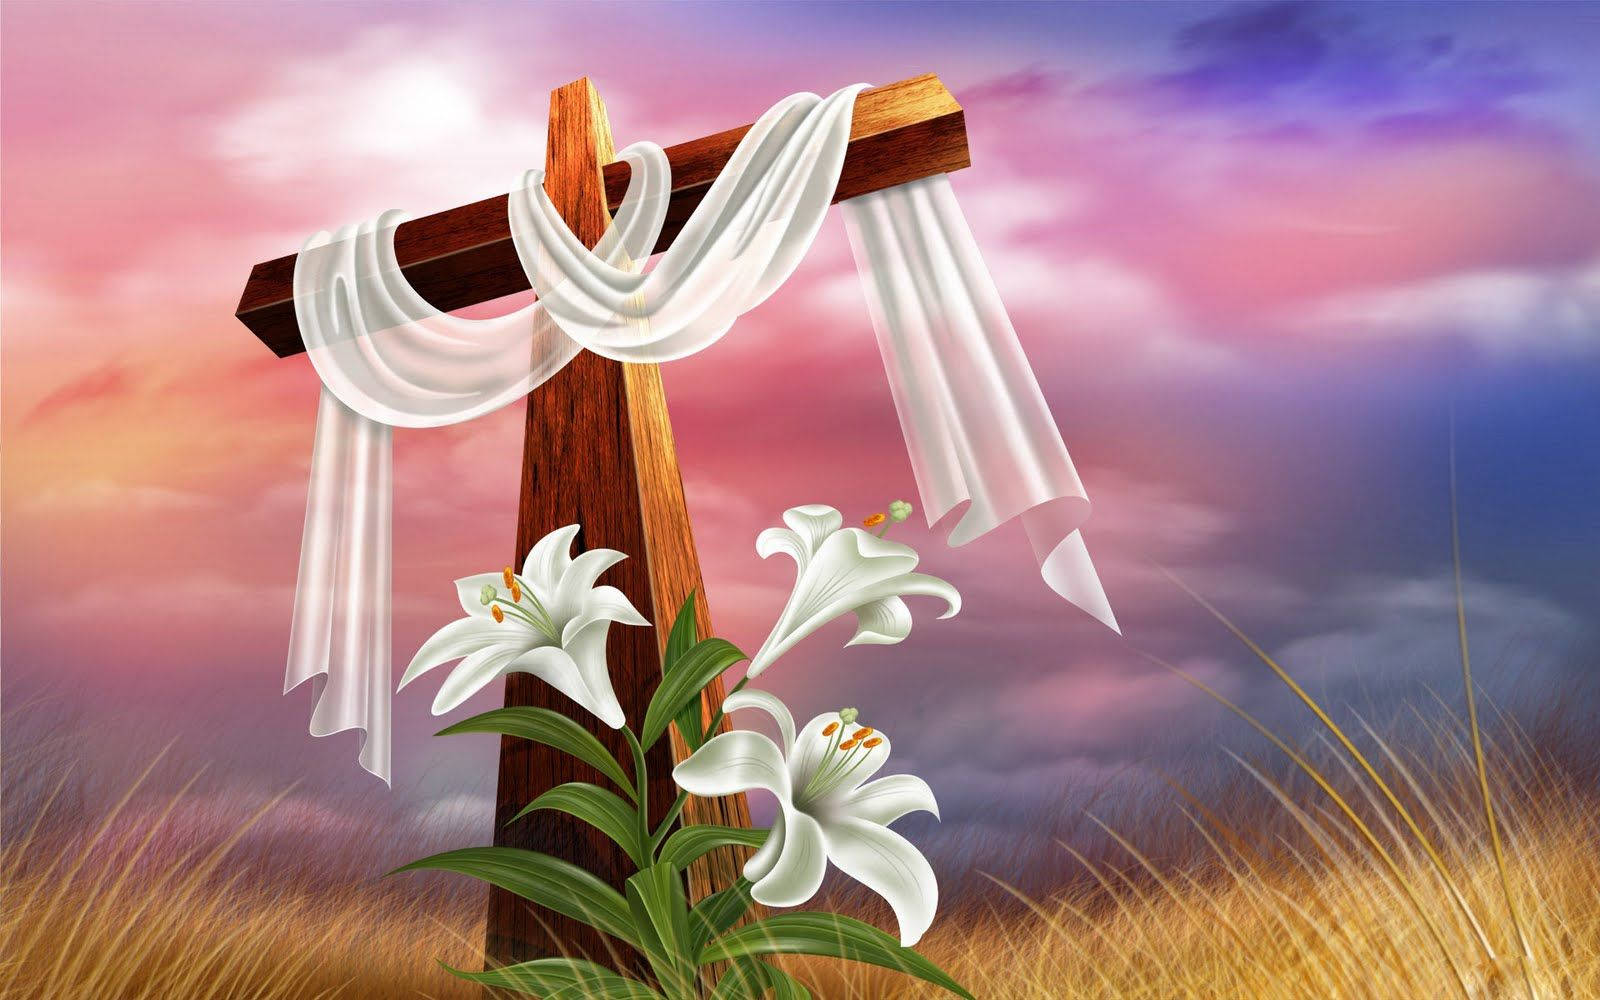 "Celebrating Resurrection and New Life on Easter Sunday." Wallpaper